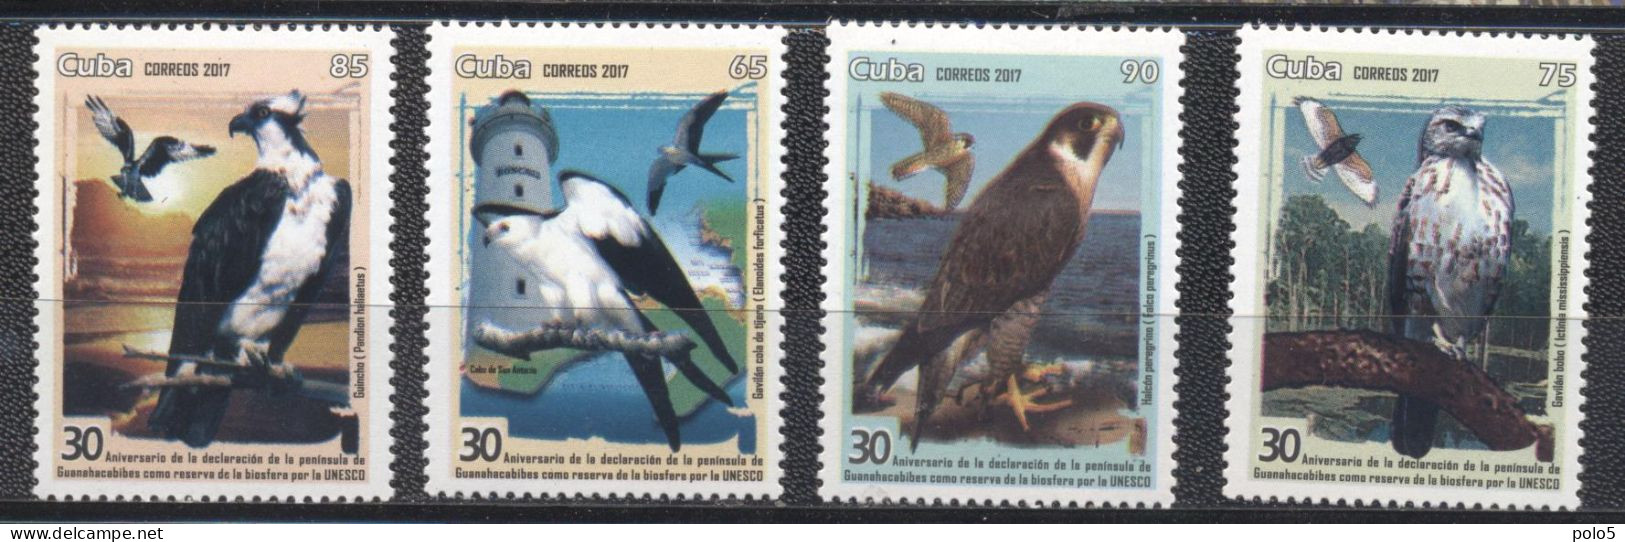 Cuba 2017-Birds-The 30th Anniversary Of The Guanacahabibes Pininsula Biosphere Reserve Set (4v) - Neufs